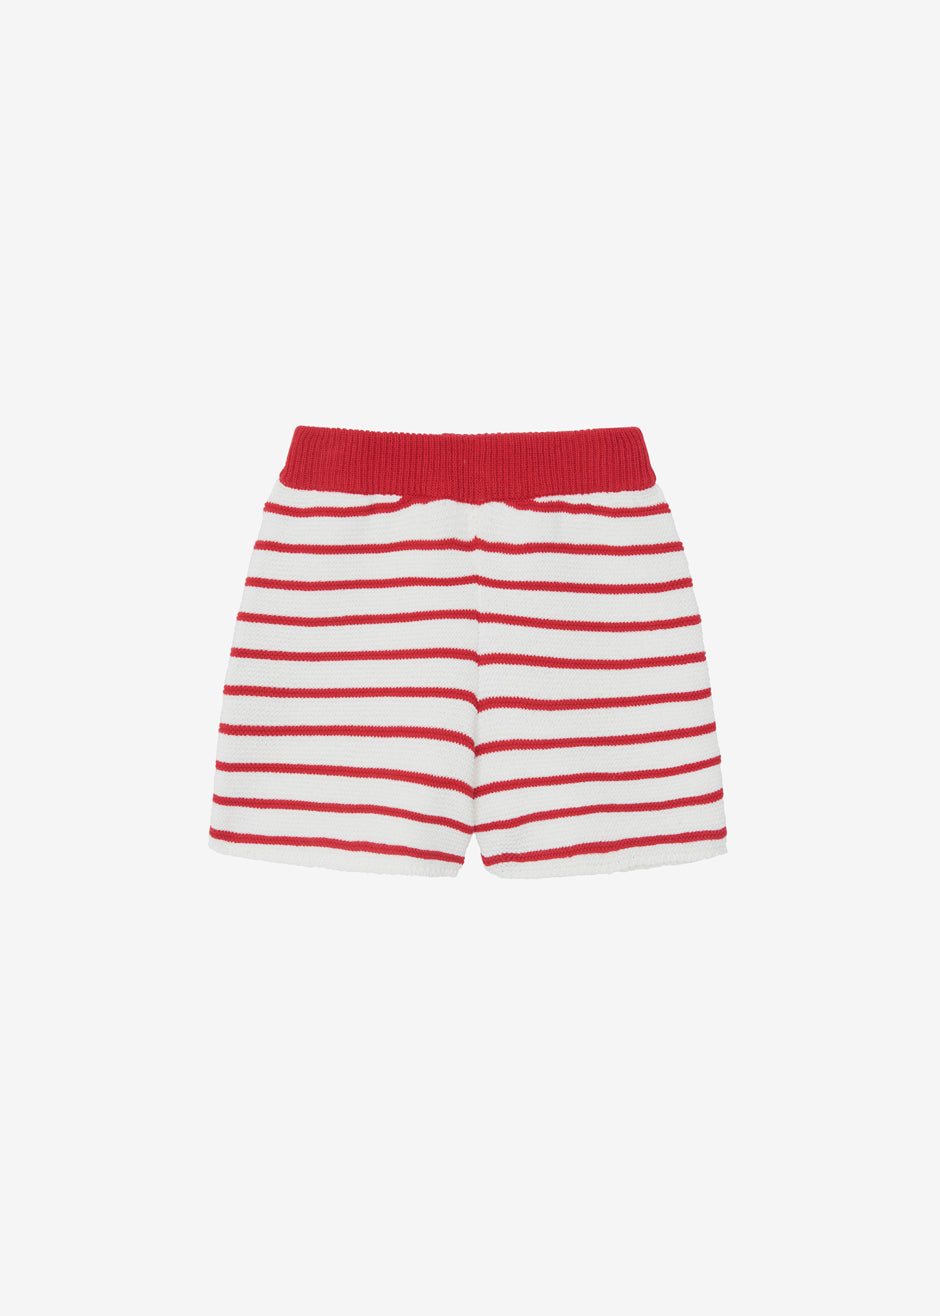 Aqua Knit Short - Red Stripe - 11